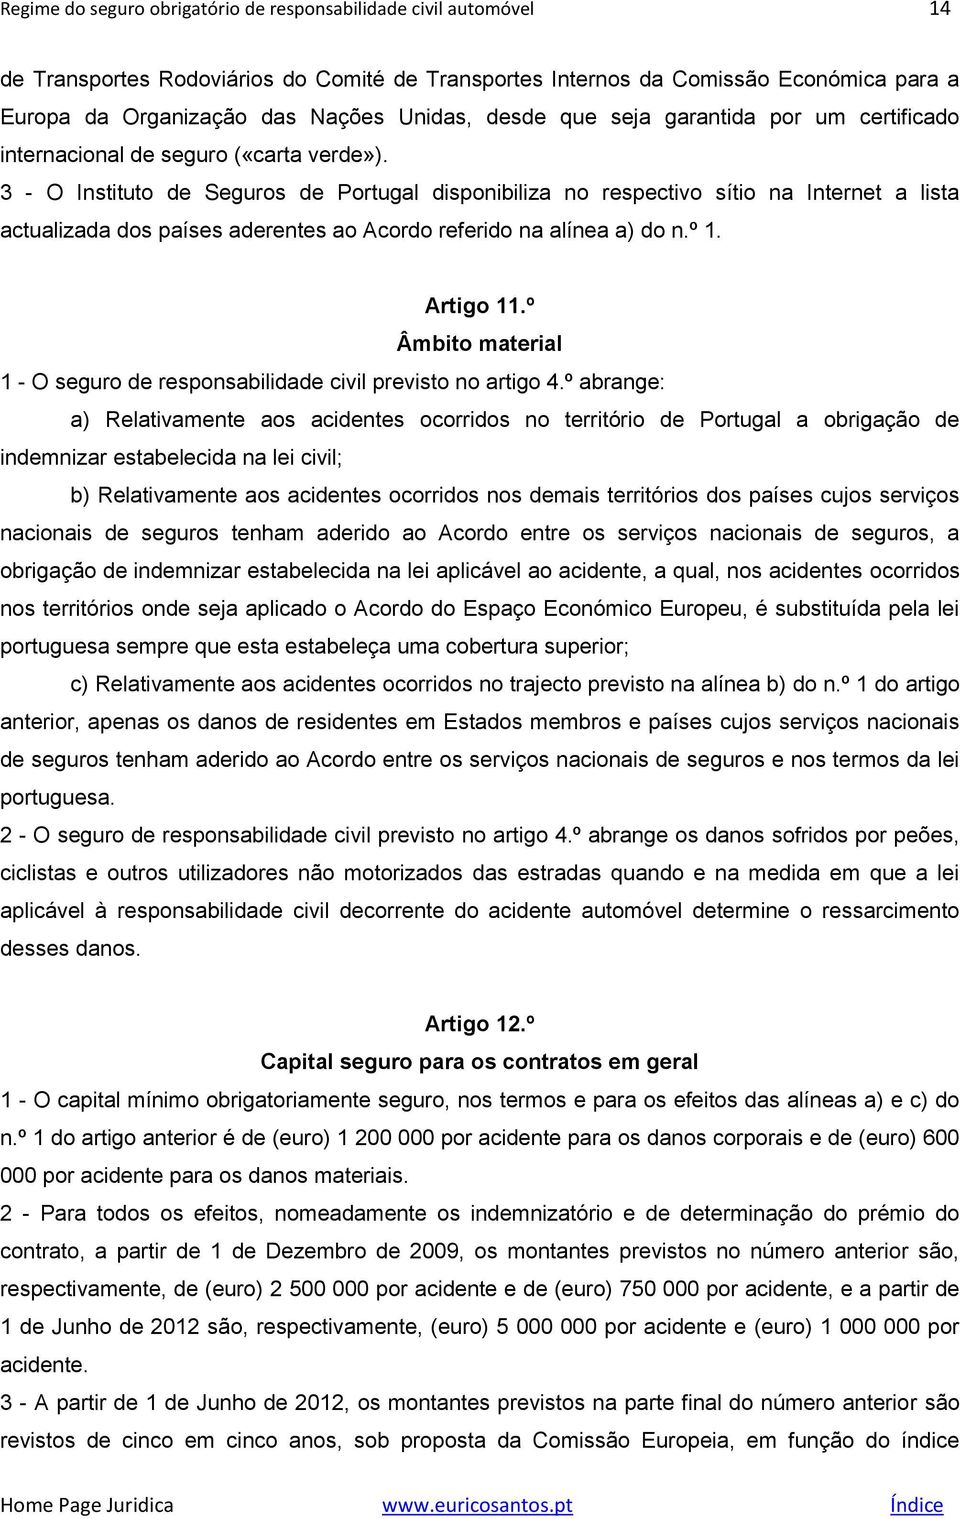 3 - O Instituto de Seguros de Portugal disponibiliza no respectivo sítio na Internet a lista actualizada dos países aderentes ao Acordo referido na alínea a) do n.º 1. Artigo 11.